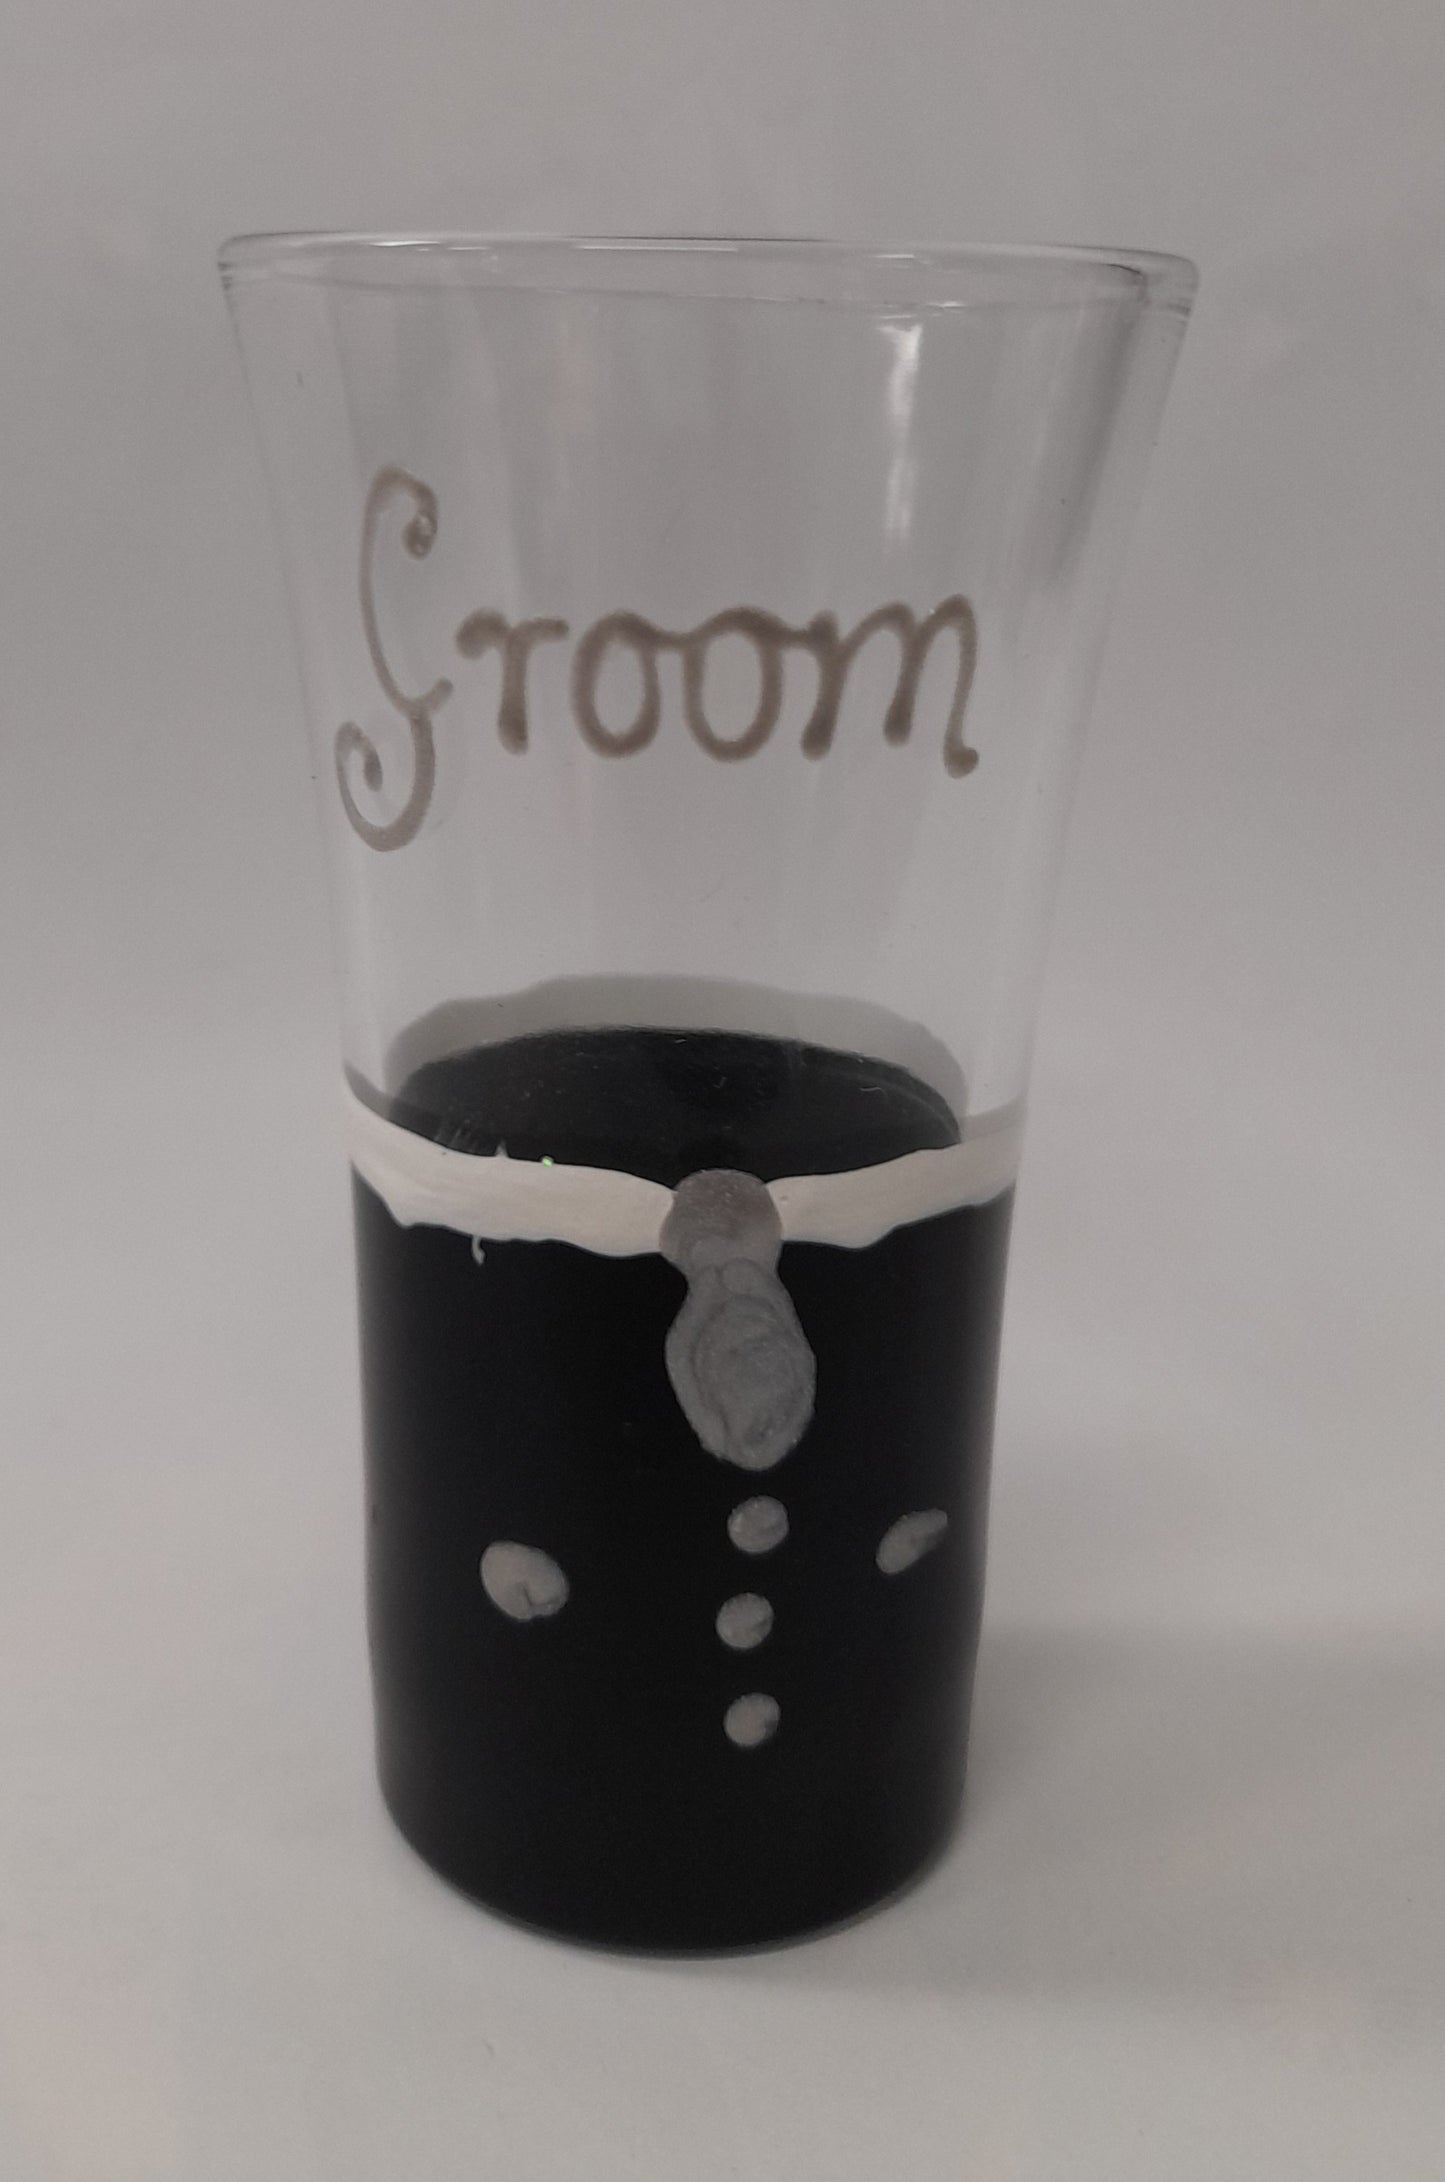 Groom - Hand Painted Shot Glass